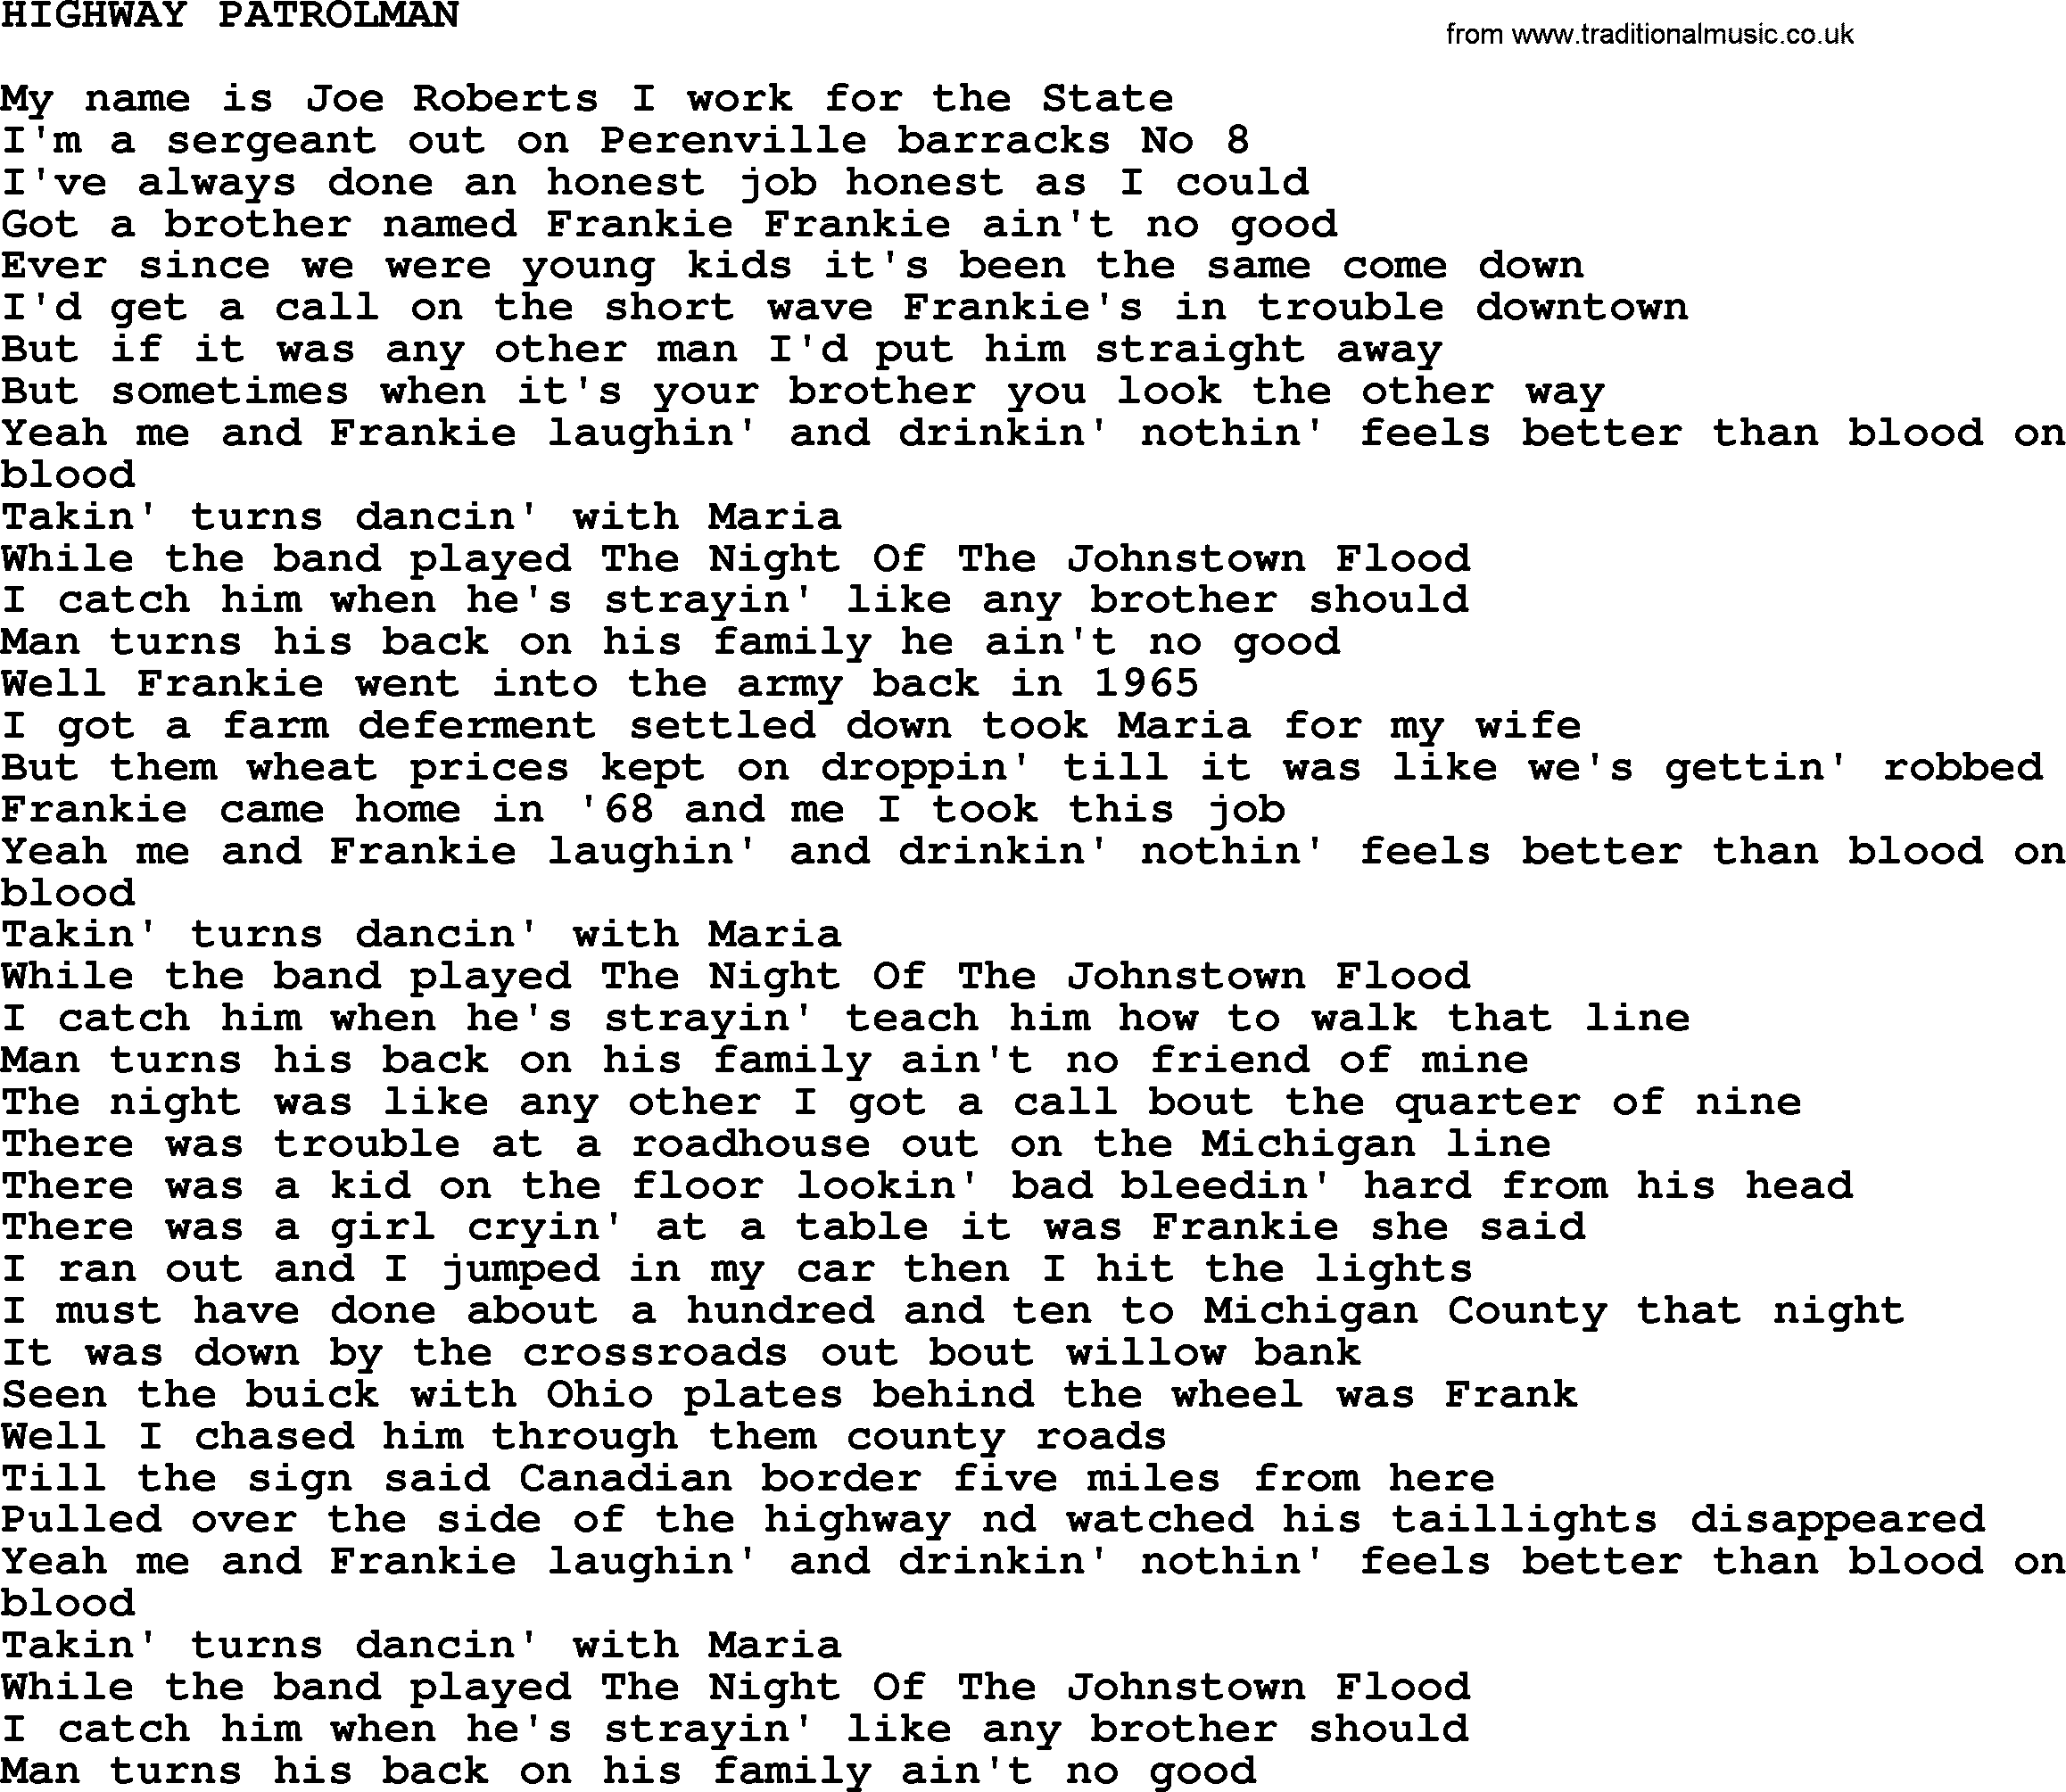 Johnny Cash song Highway Patrolman.txt lyrics